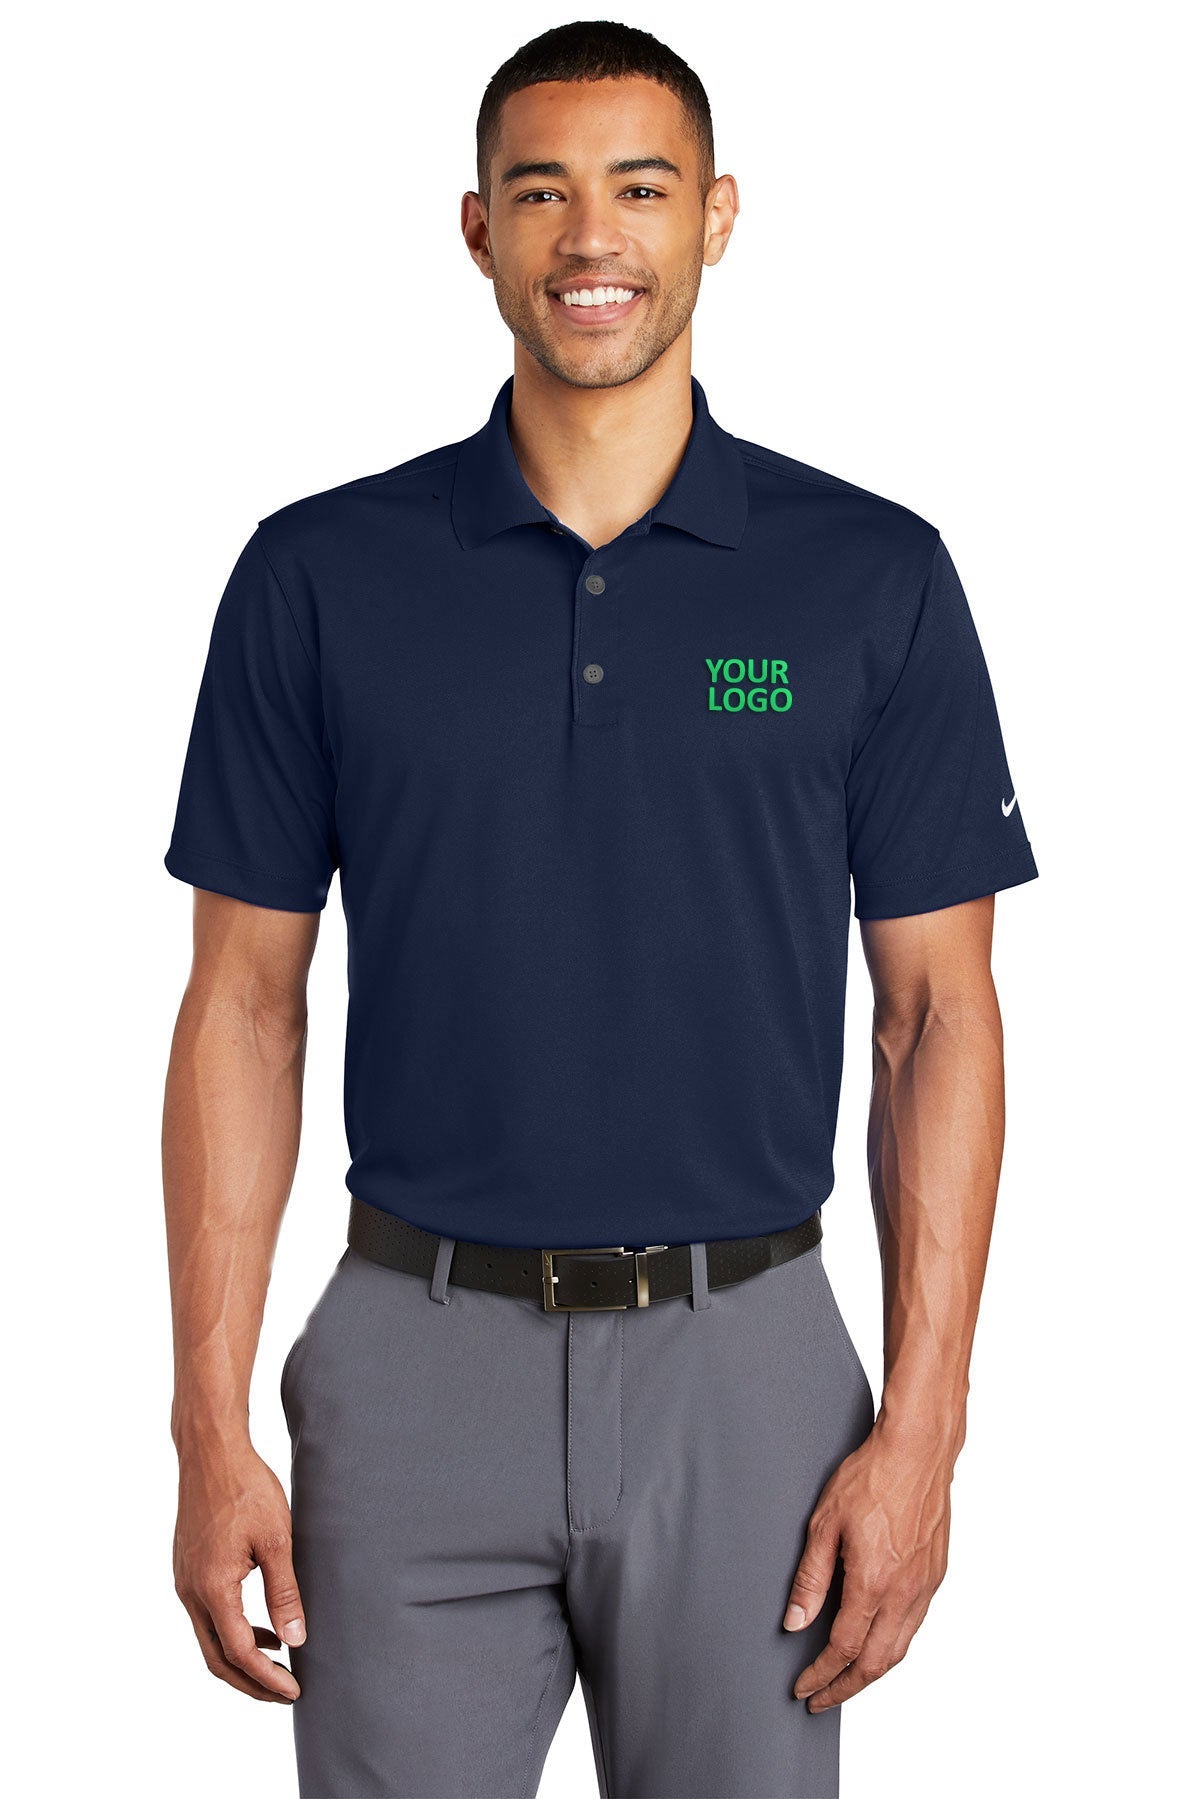 nike midnight navy 203690 work polo shirts with logo